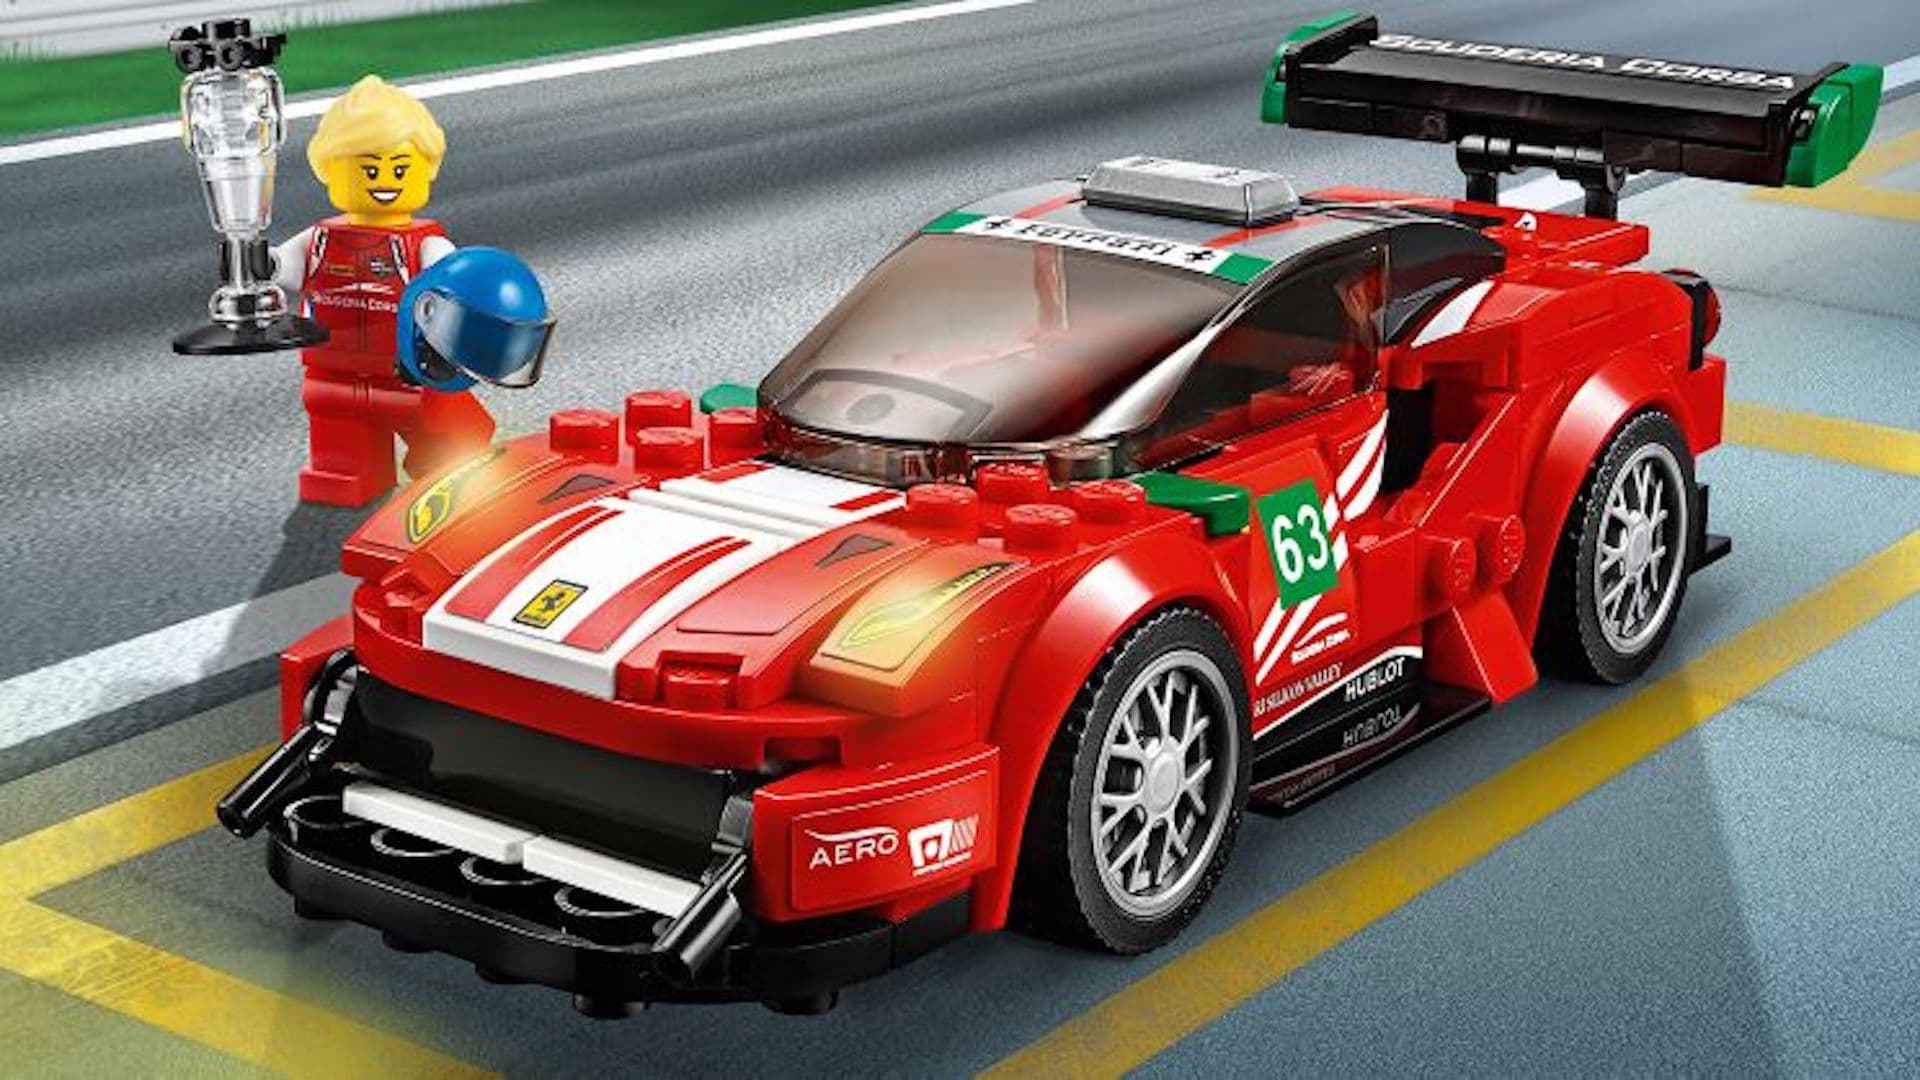 Lego Works Its Block Magic With the Scuderia Corsa Ferrari 488 GT3